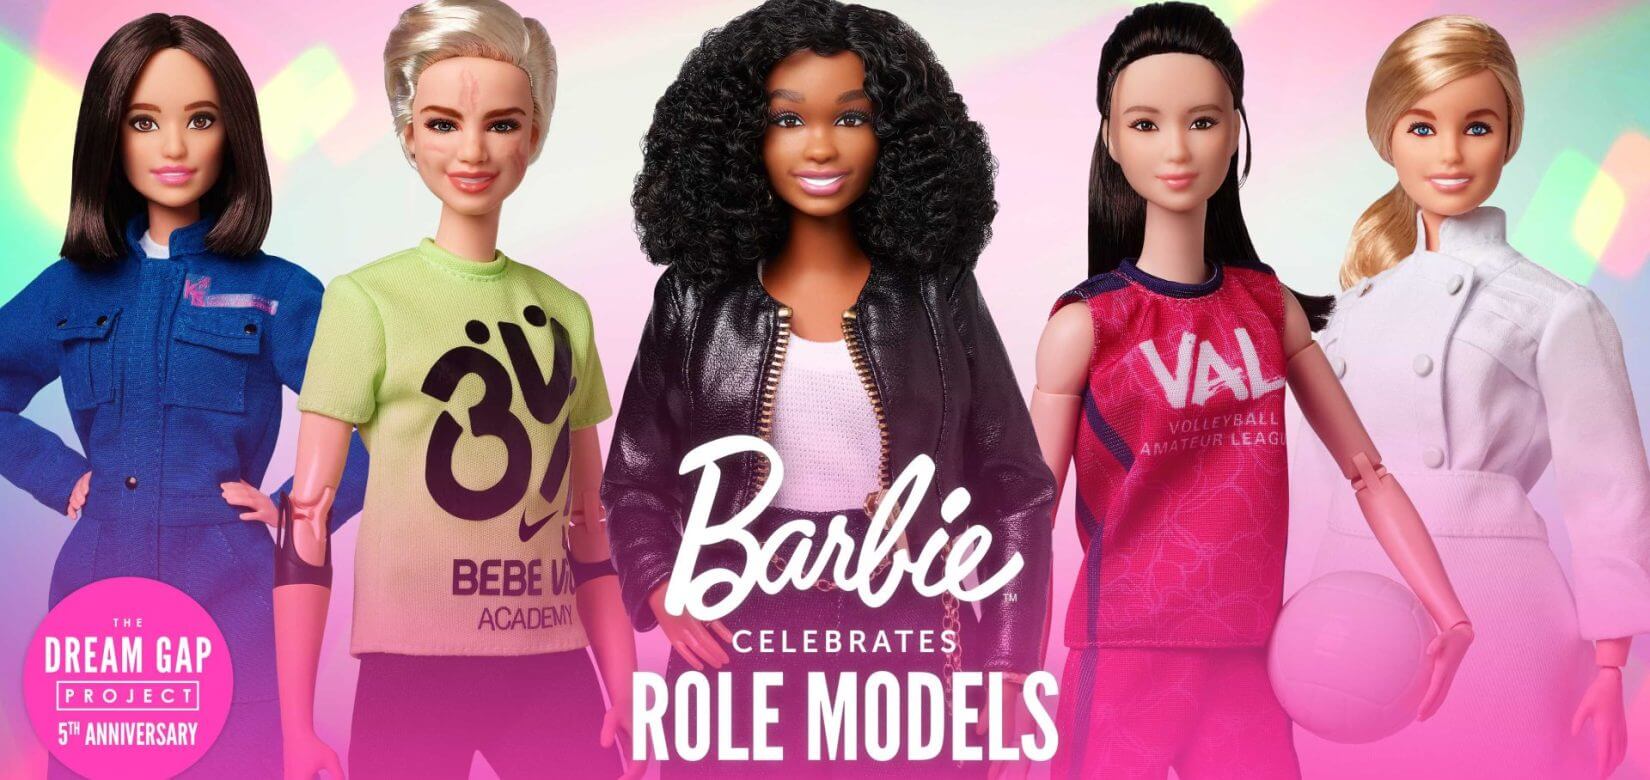 Dream Gap Project: Η Barbie γιορτάζει την 5η επέτειο κάνοντας δωρεά κούκλες για παγκόσμια δημοπρασία